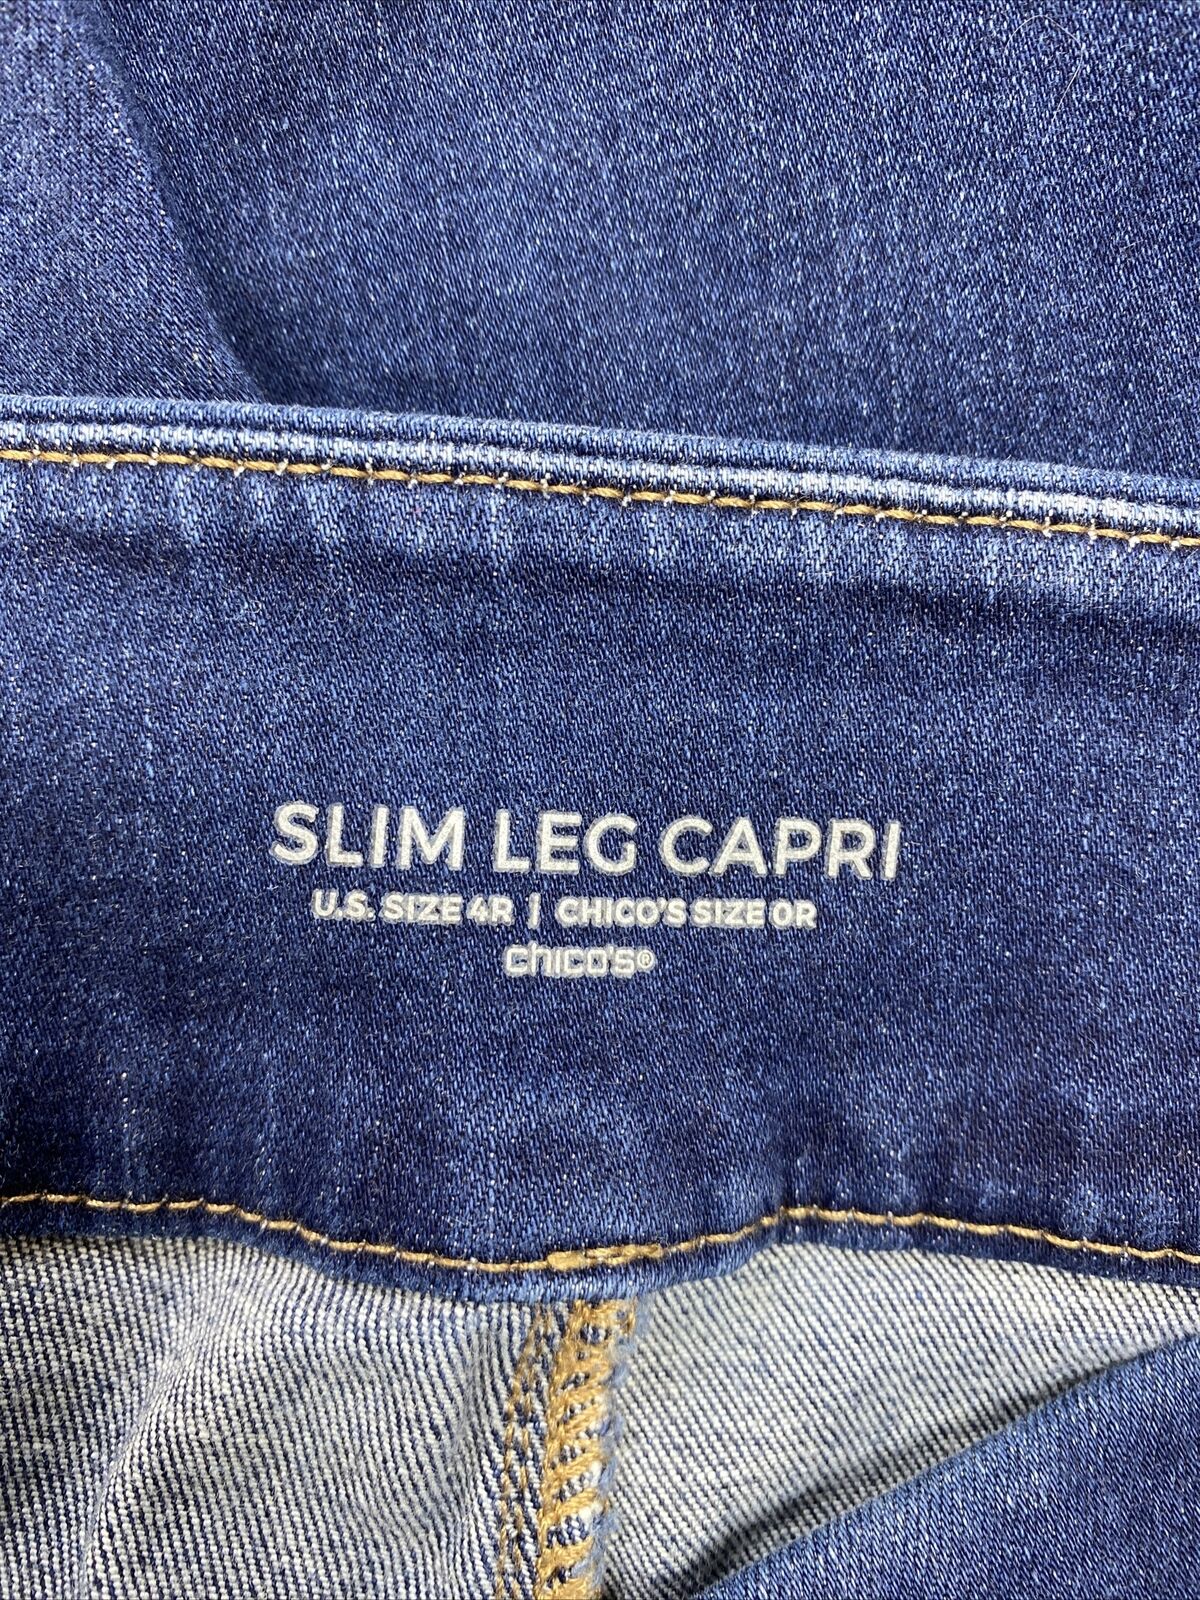 Chico's Women's Dark Wash Slim Leg Capri Stretch Denim Jeans - 0/US 4